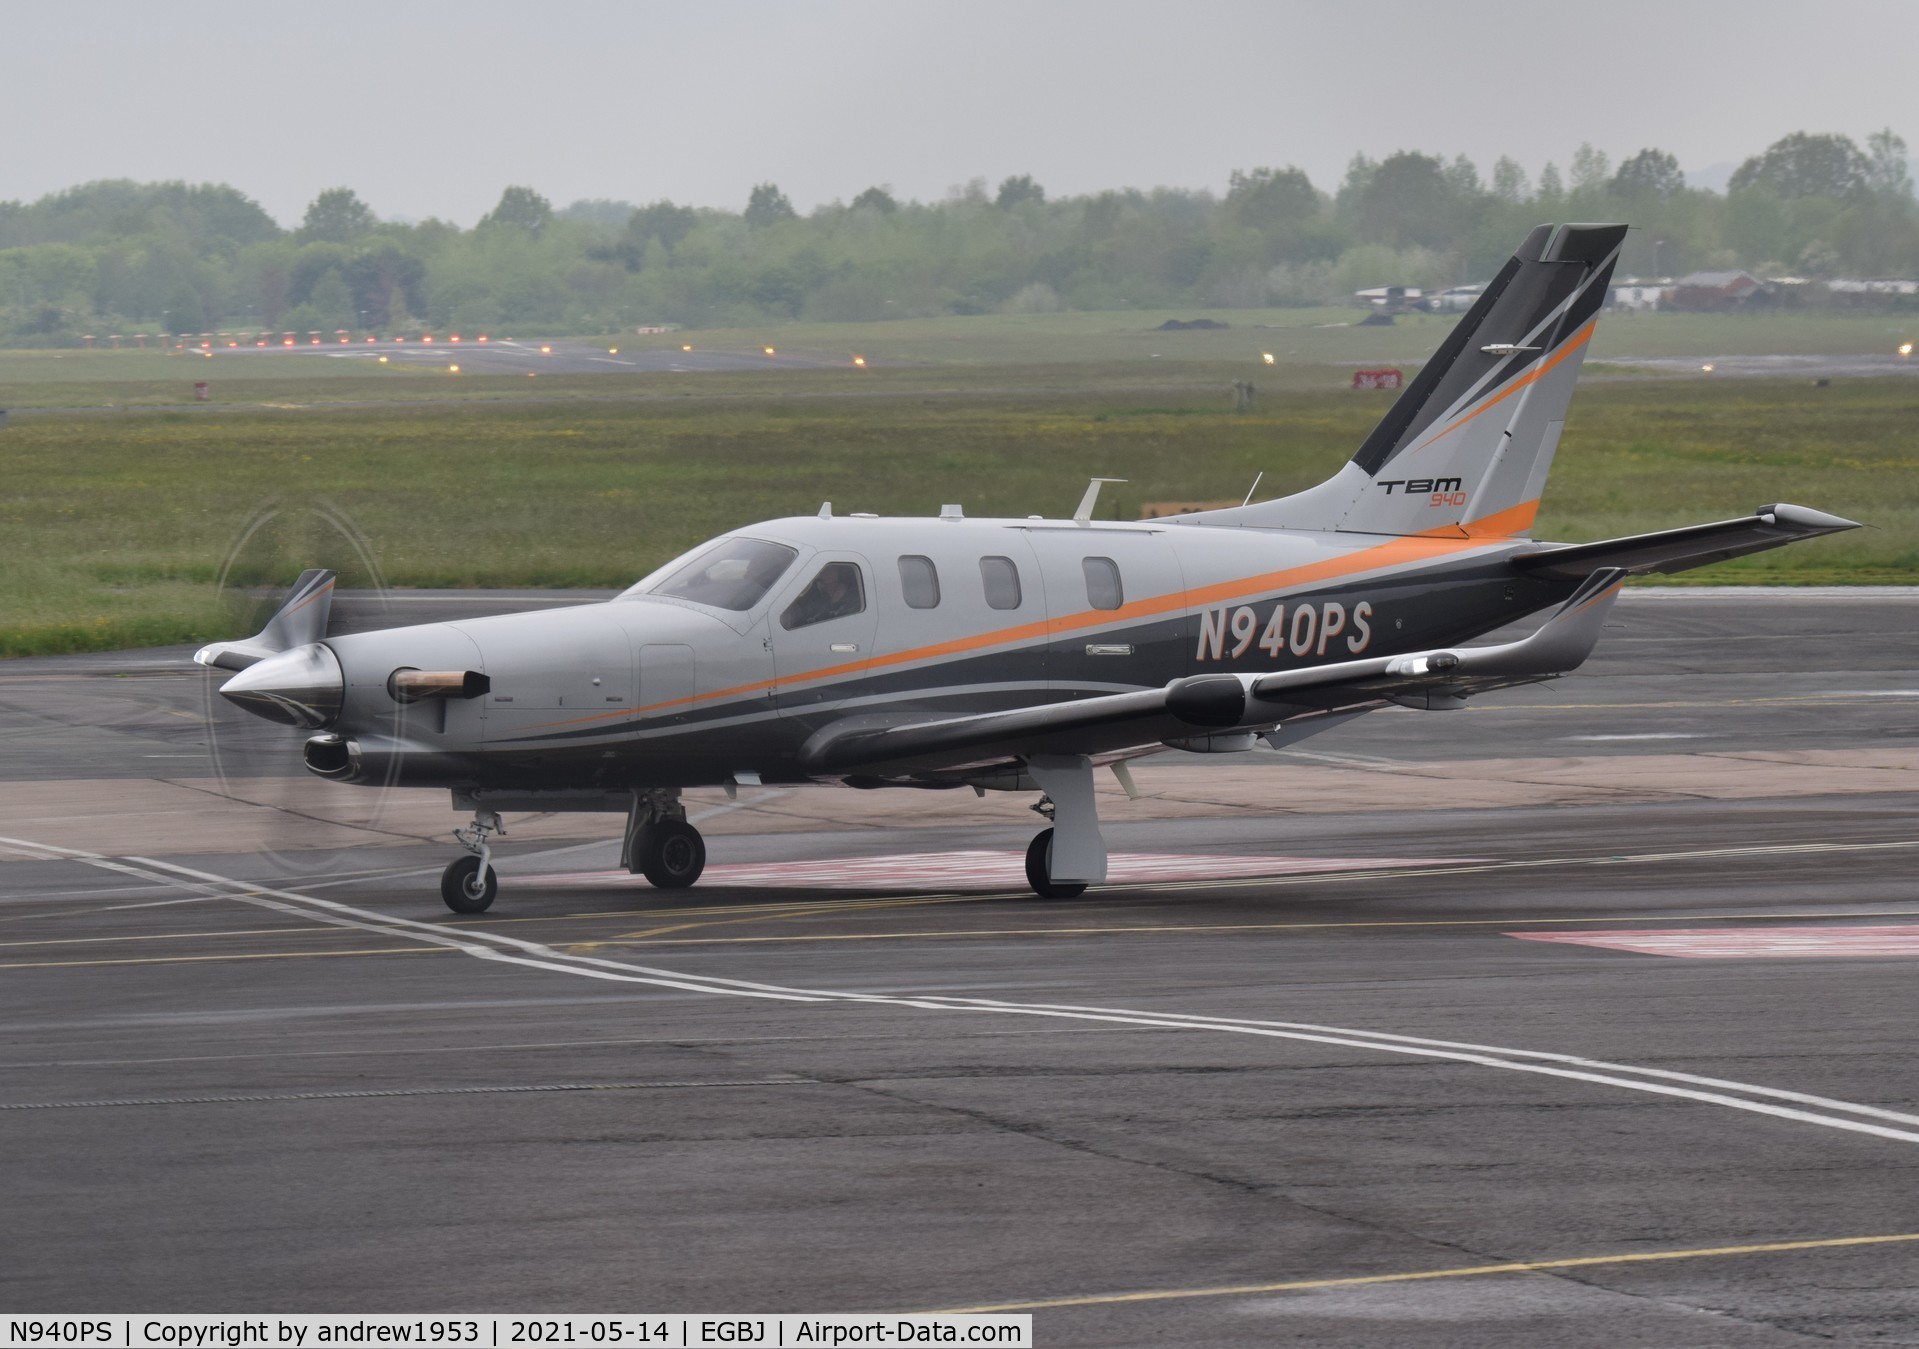 N940PS, 2019 Daher TBM-940 C/N 1281, N940PS at Gloucestershire Airport.